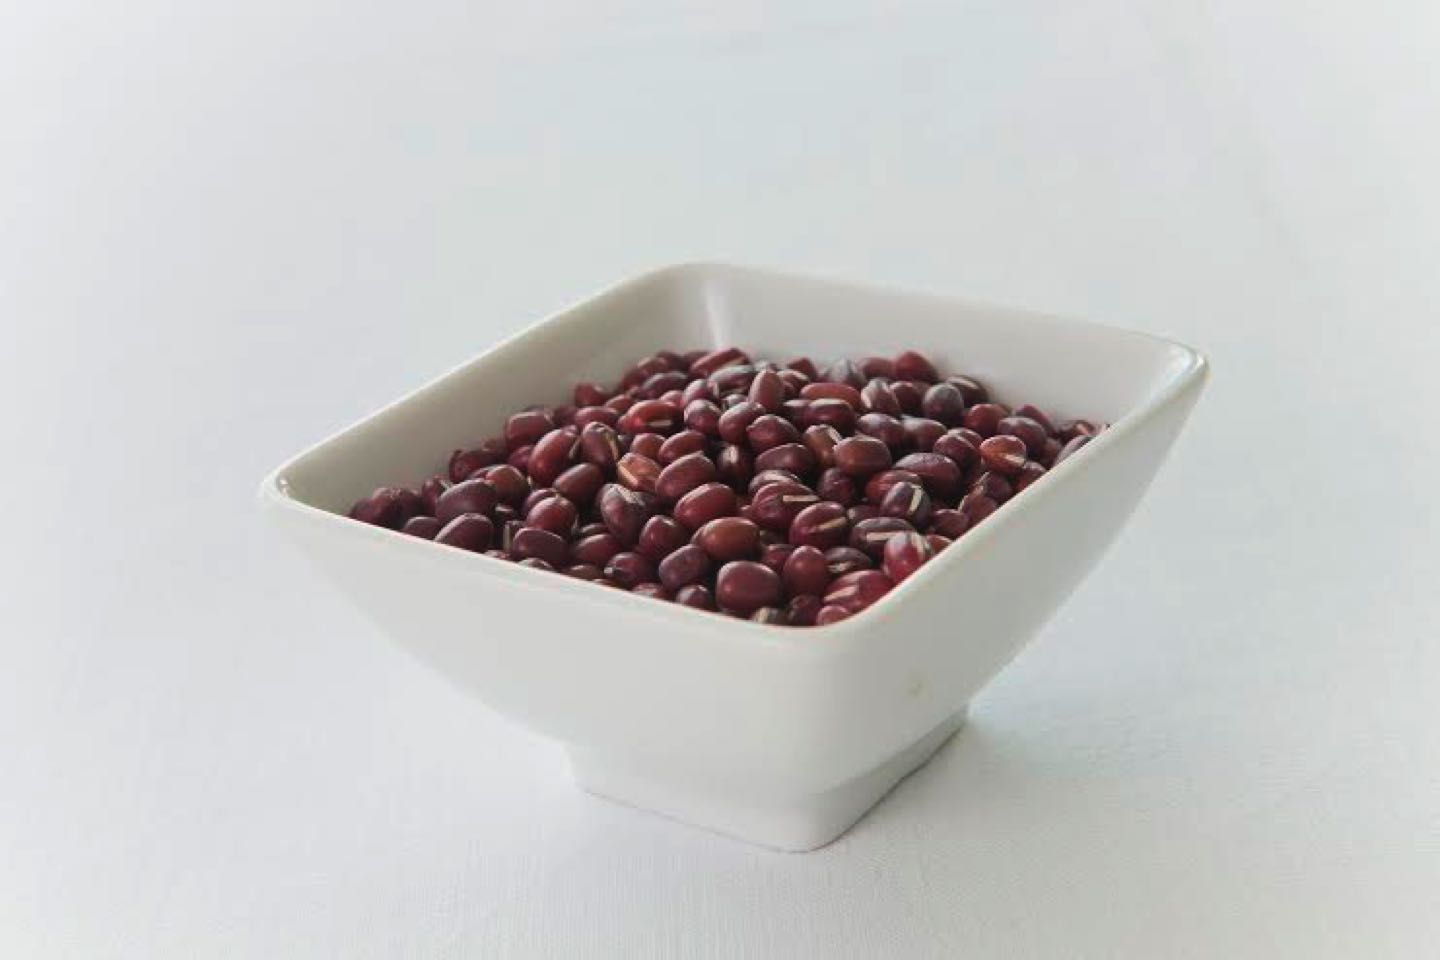 adzuki bean properties